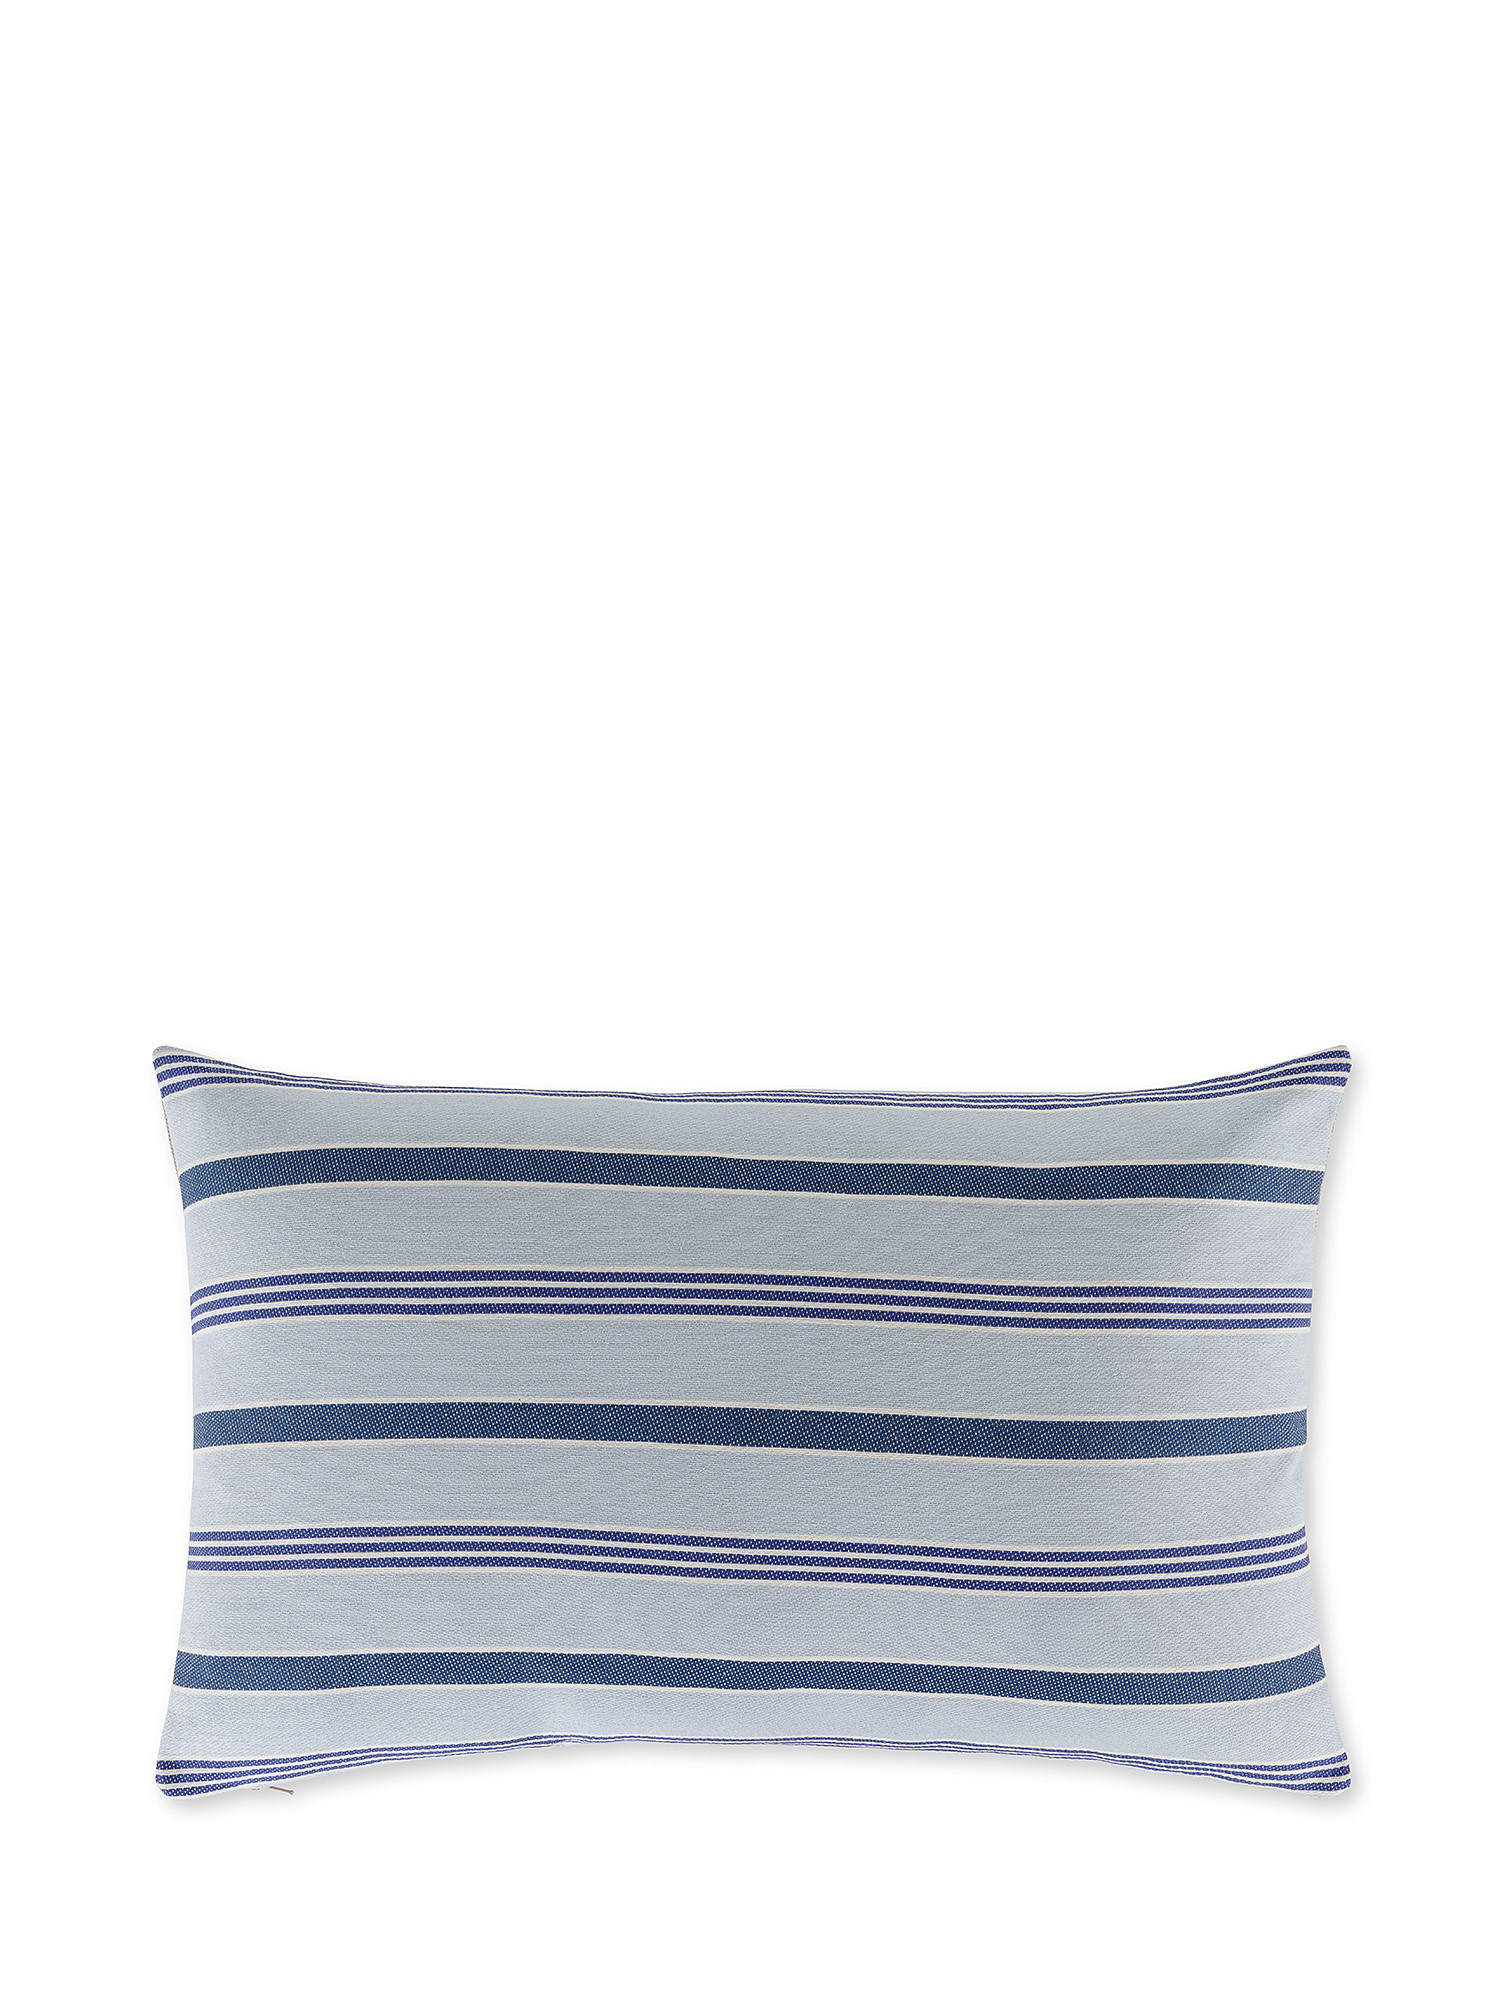 Striped jacquard cushion 35x55cm, Blue, large image number 0